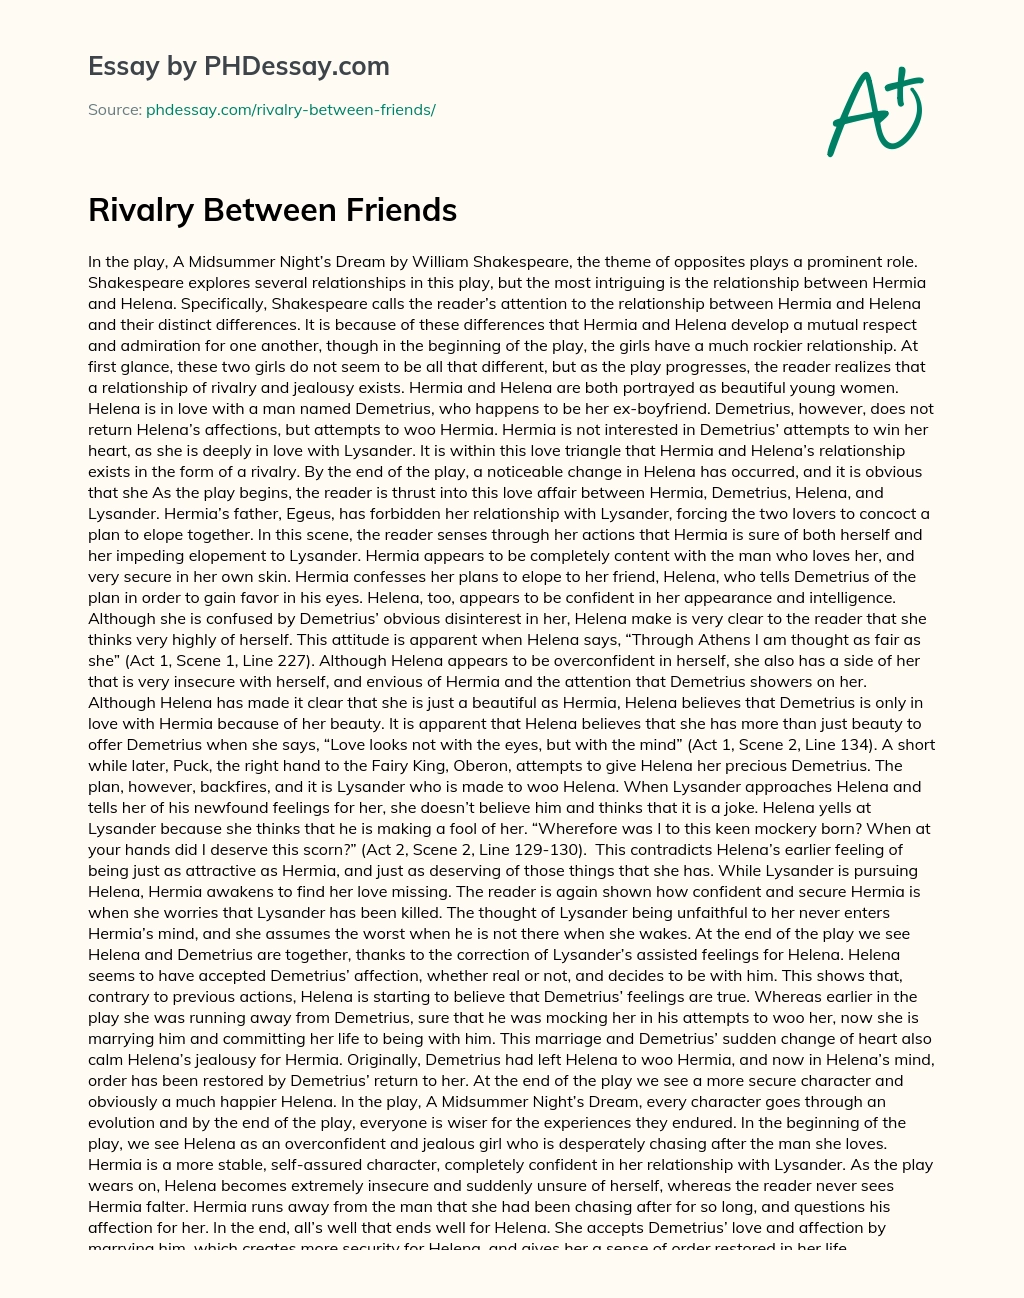 Rivalry Between Friends essay